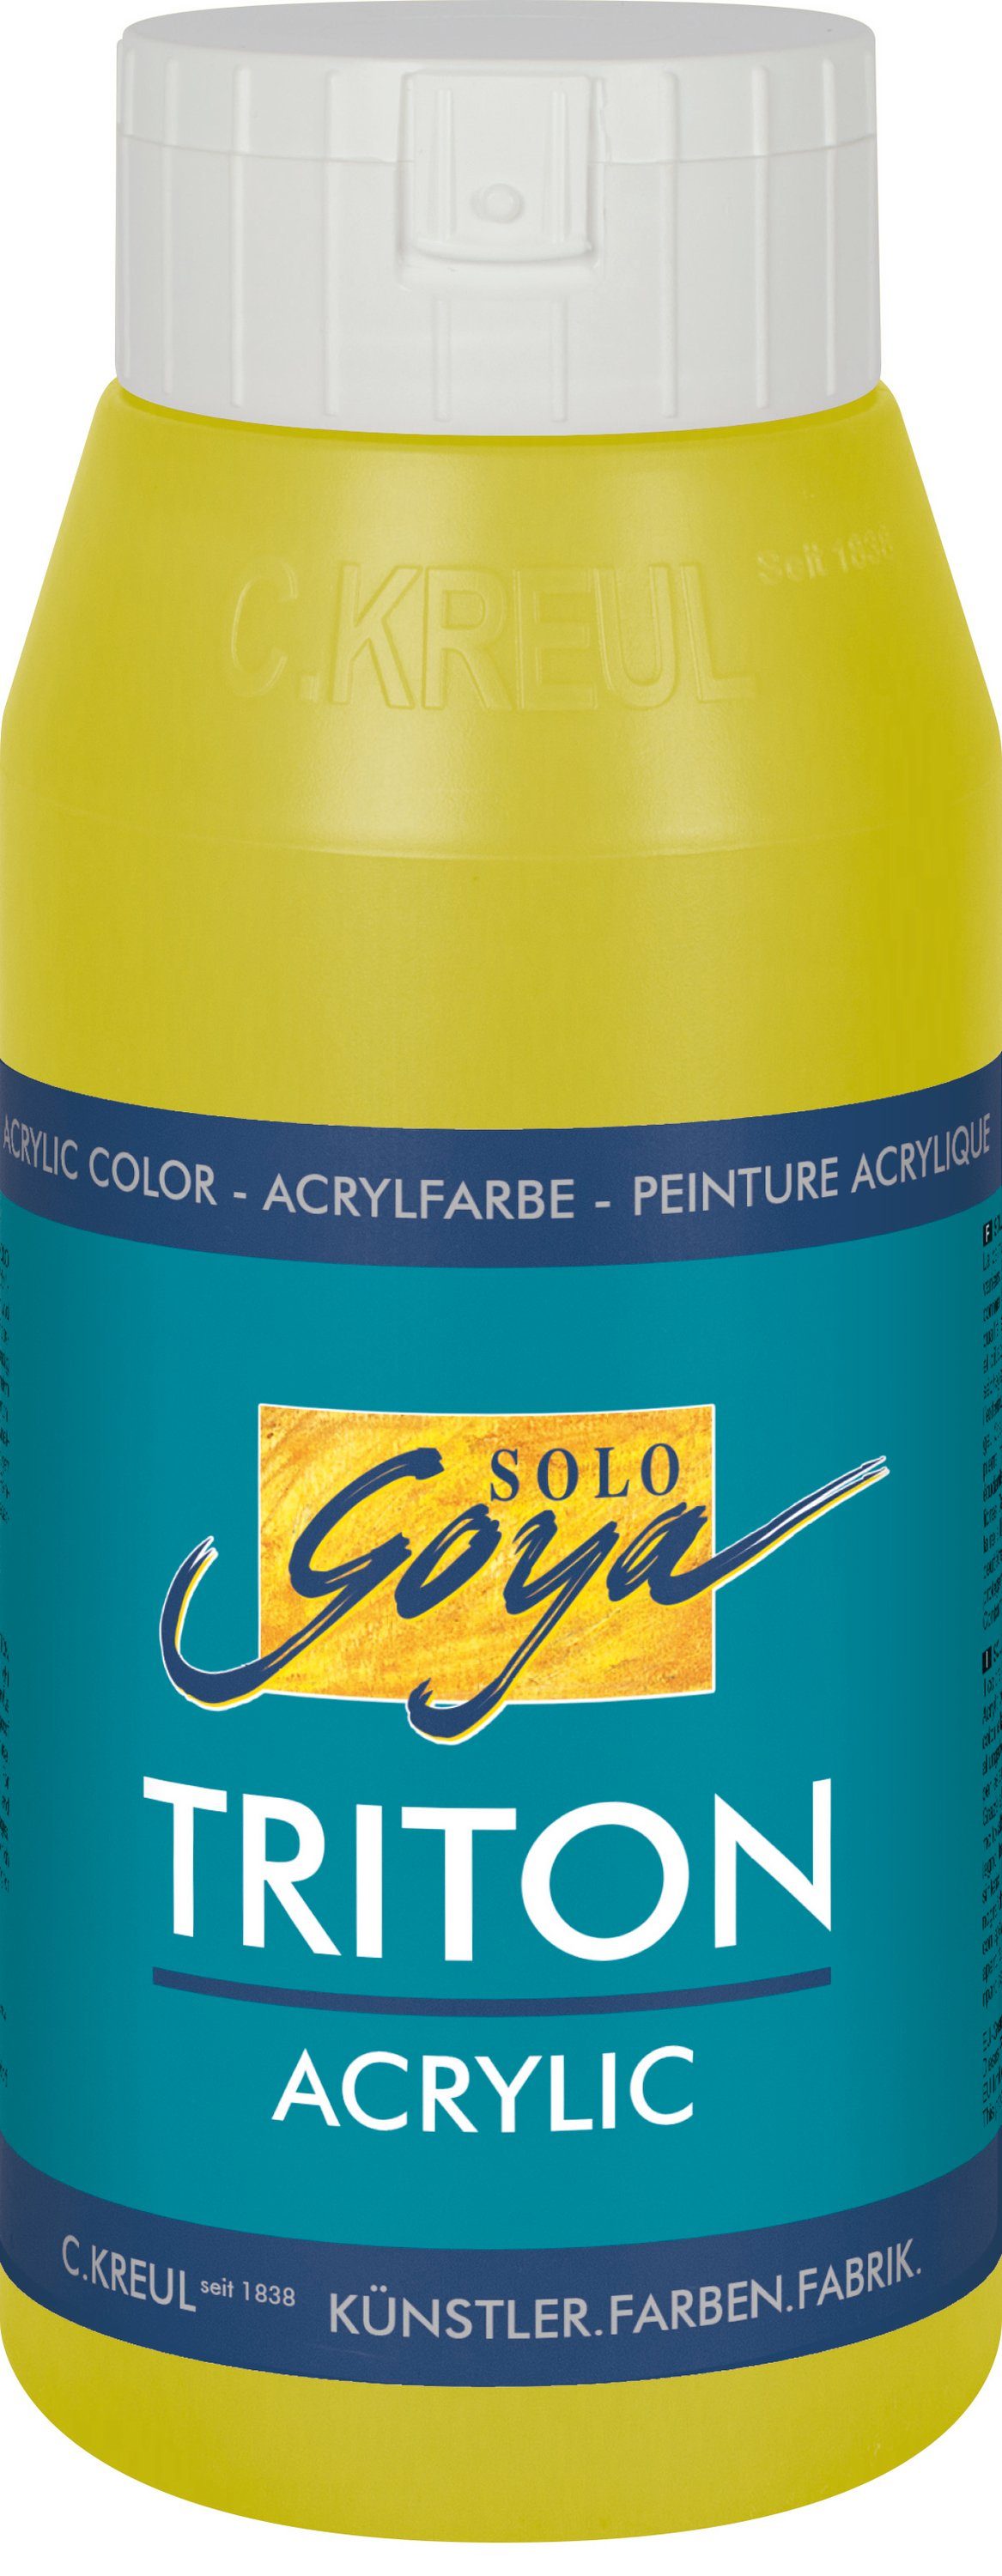 Kreul Acrylfarbe Solo Goya Triton Acrylic, 750 ml Olivgrün hell